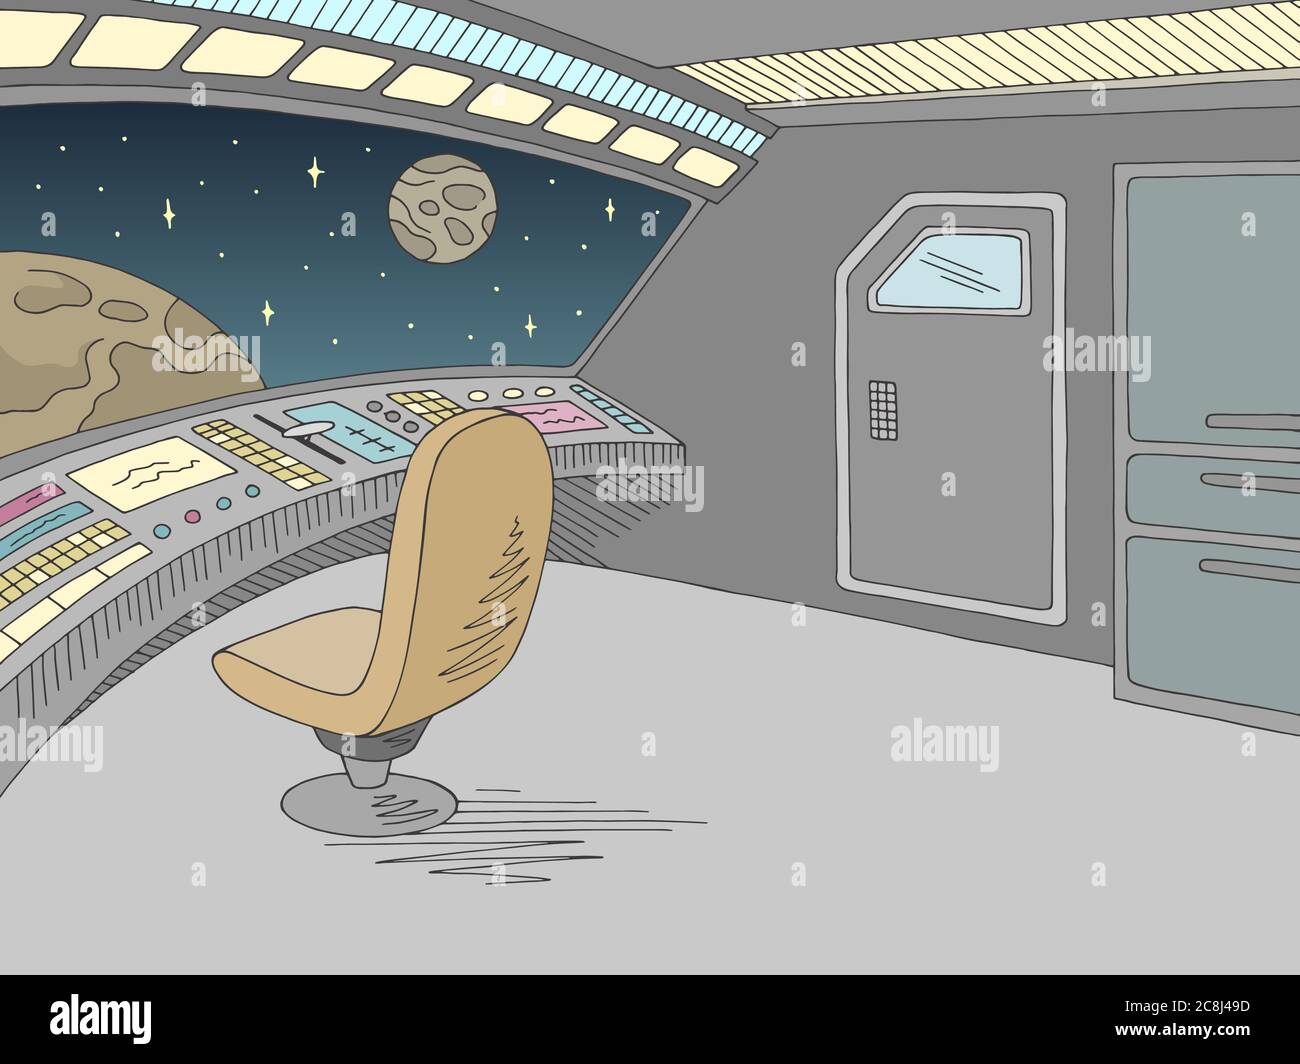 Spaceship interior control panel Stock Vector Images - Alamy